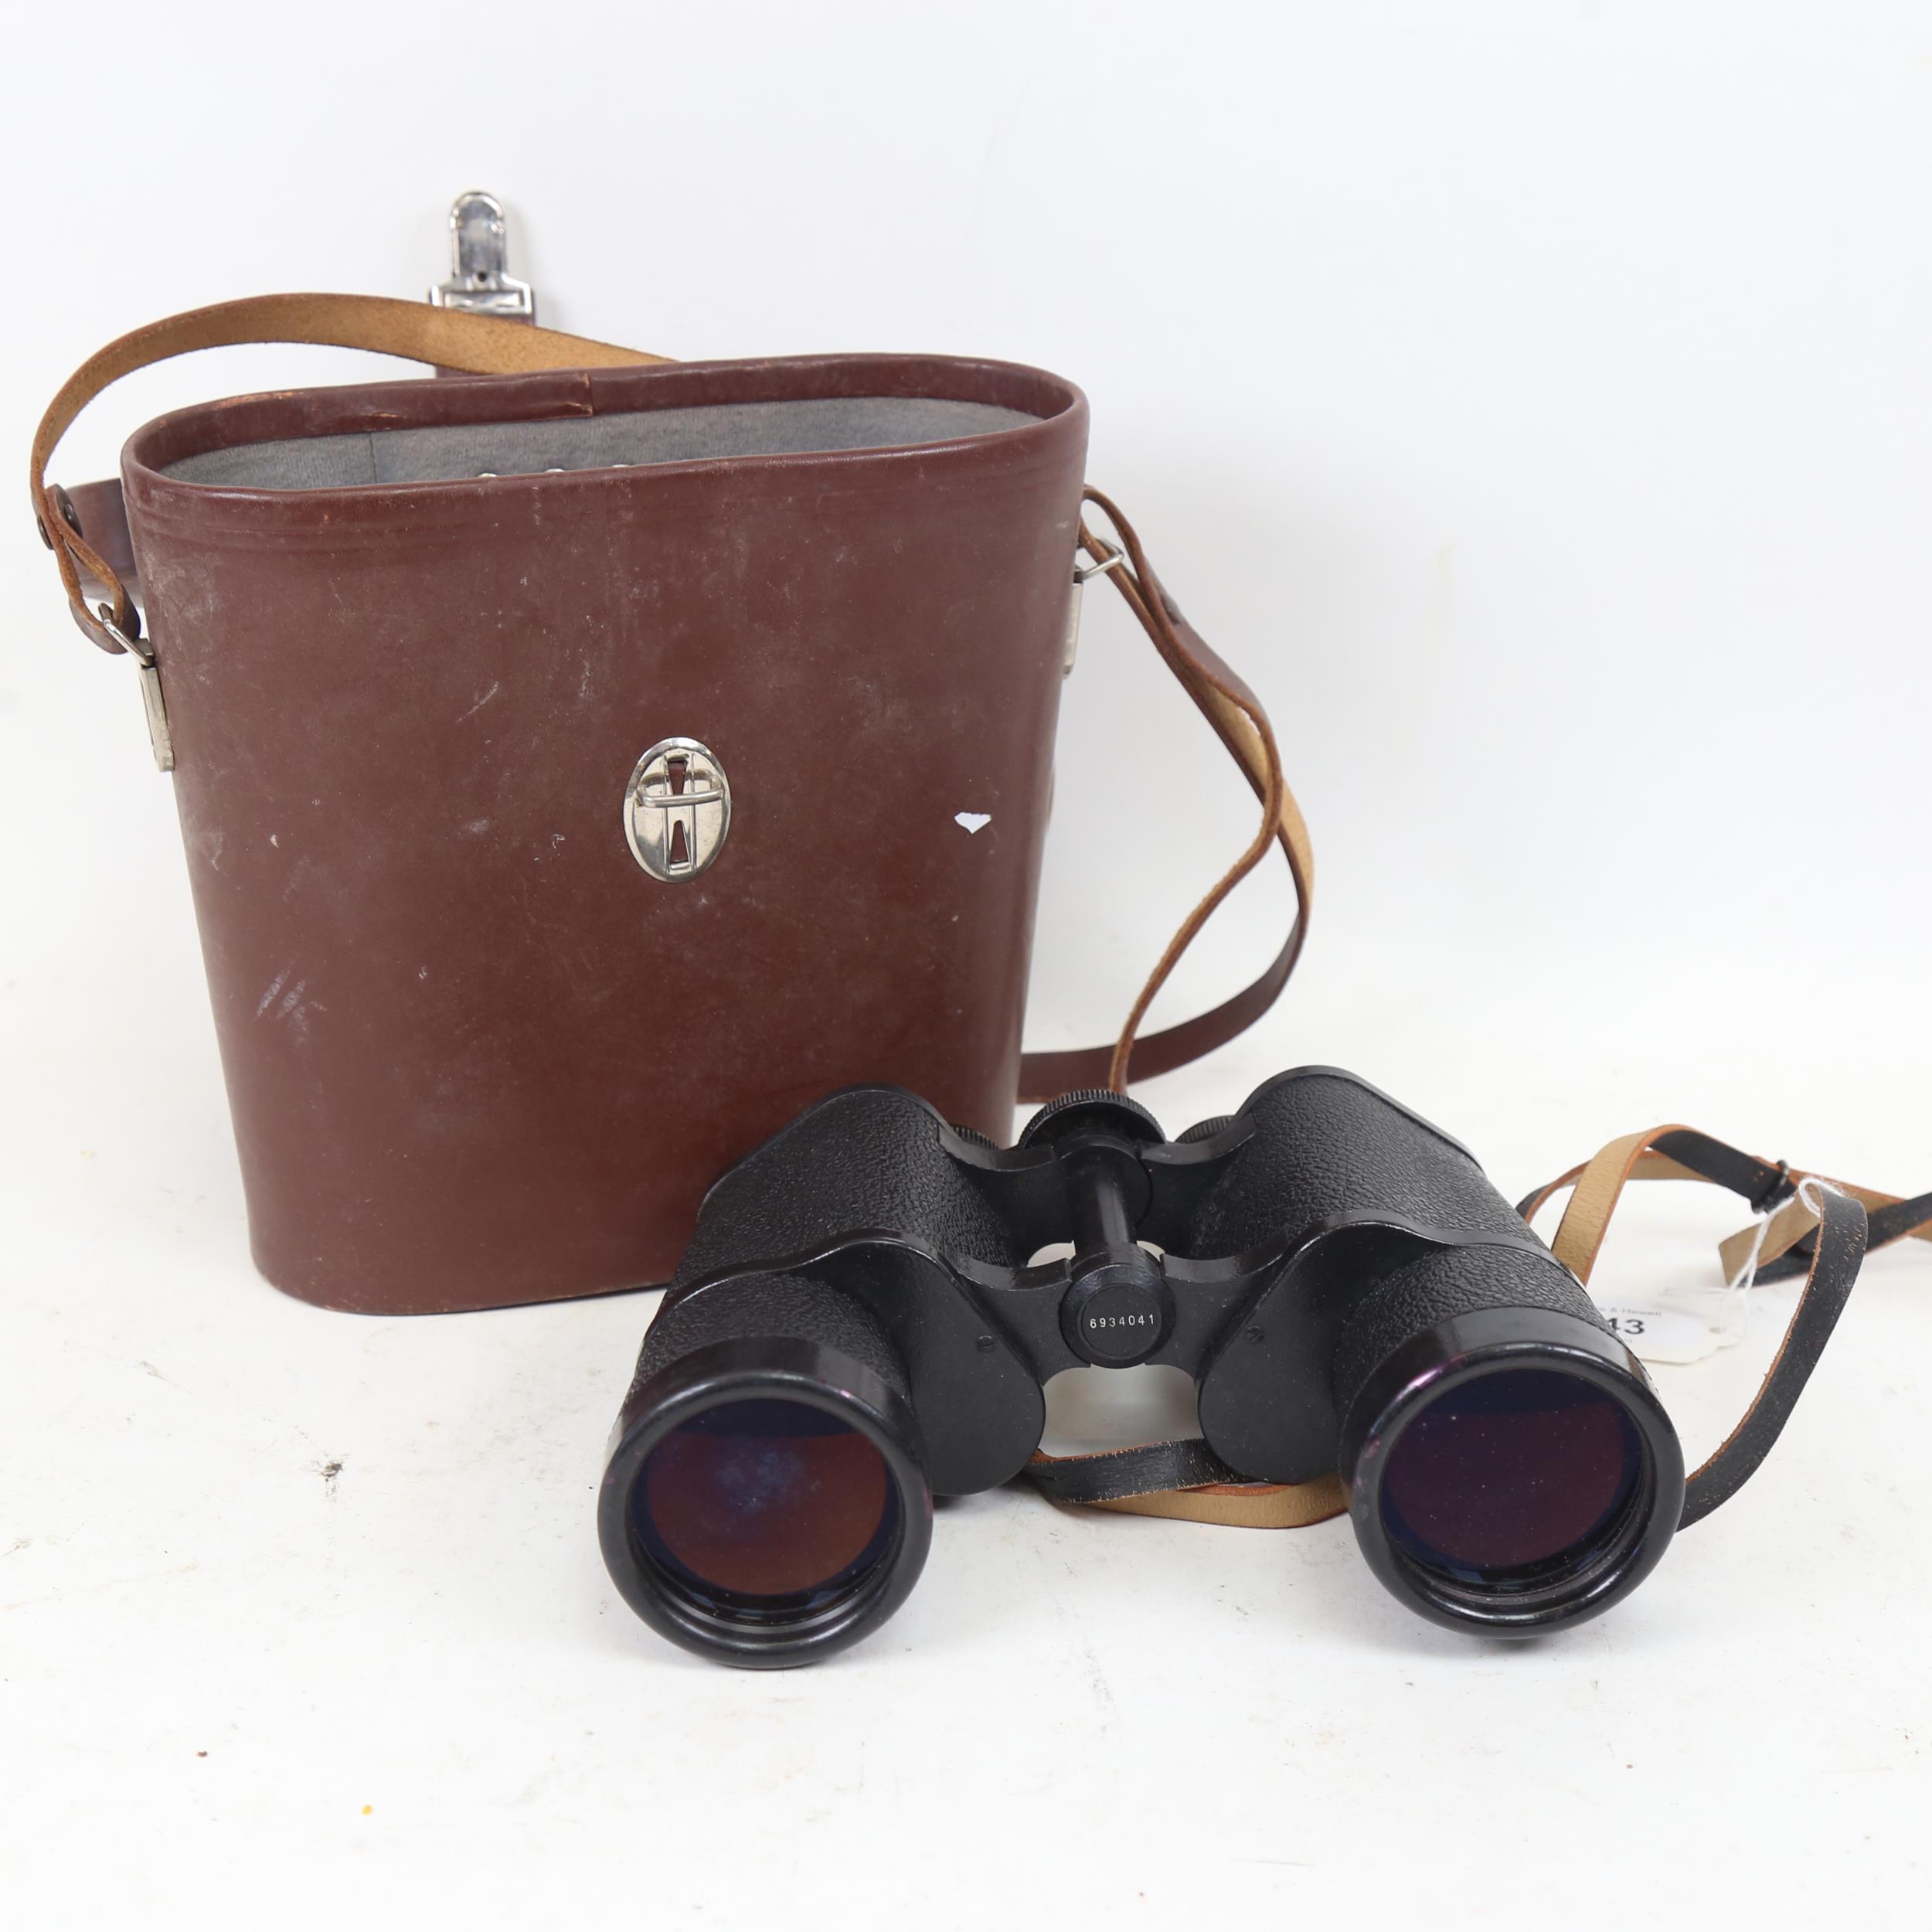 Carl Zeiss Jena 10x50 multi-coated binoculars, serial no. 6934041, cased